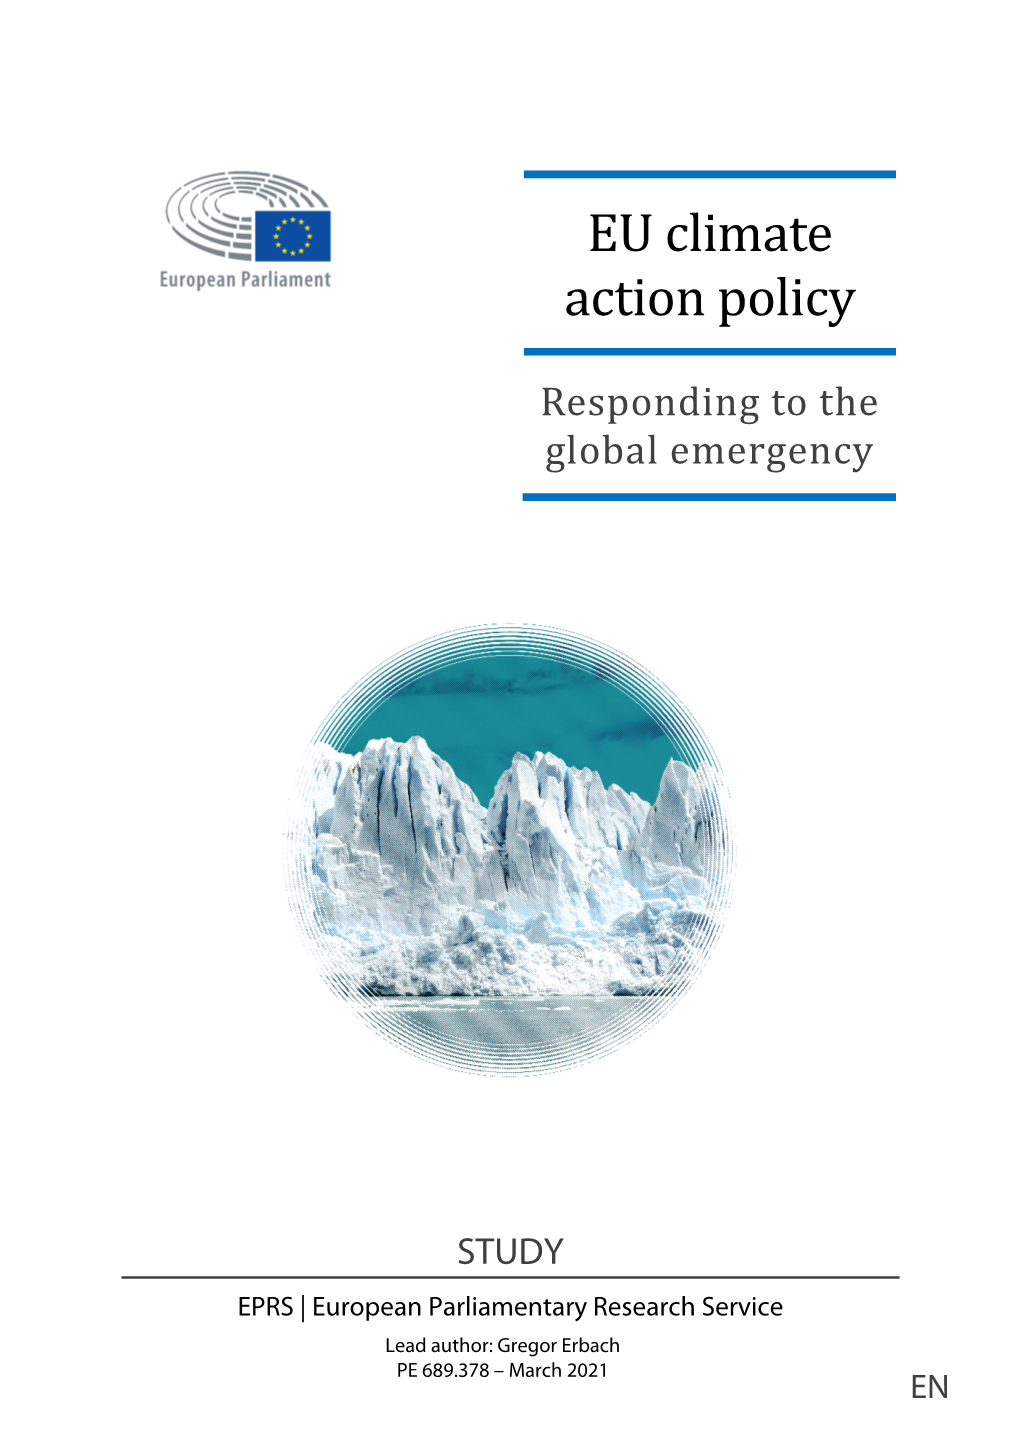 EU Climate Action Policy